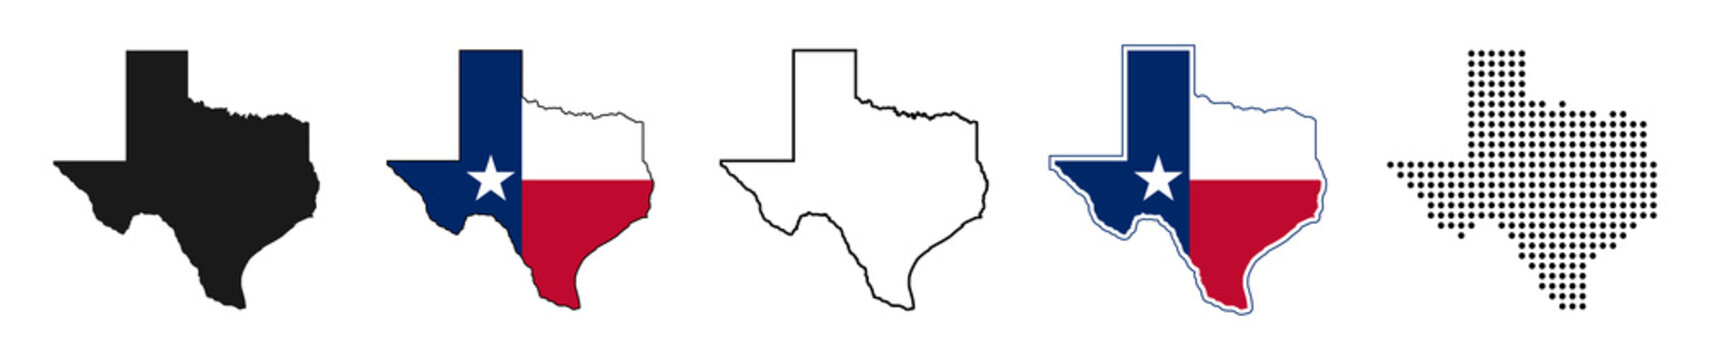 Texas map icon set. Texas map symbol isolated on white background.